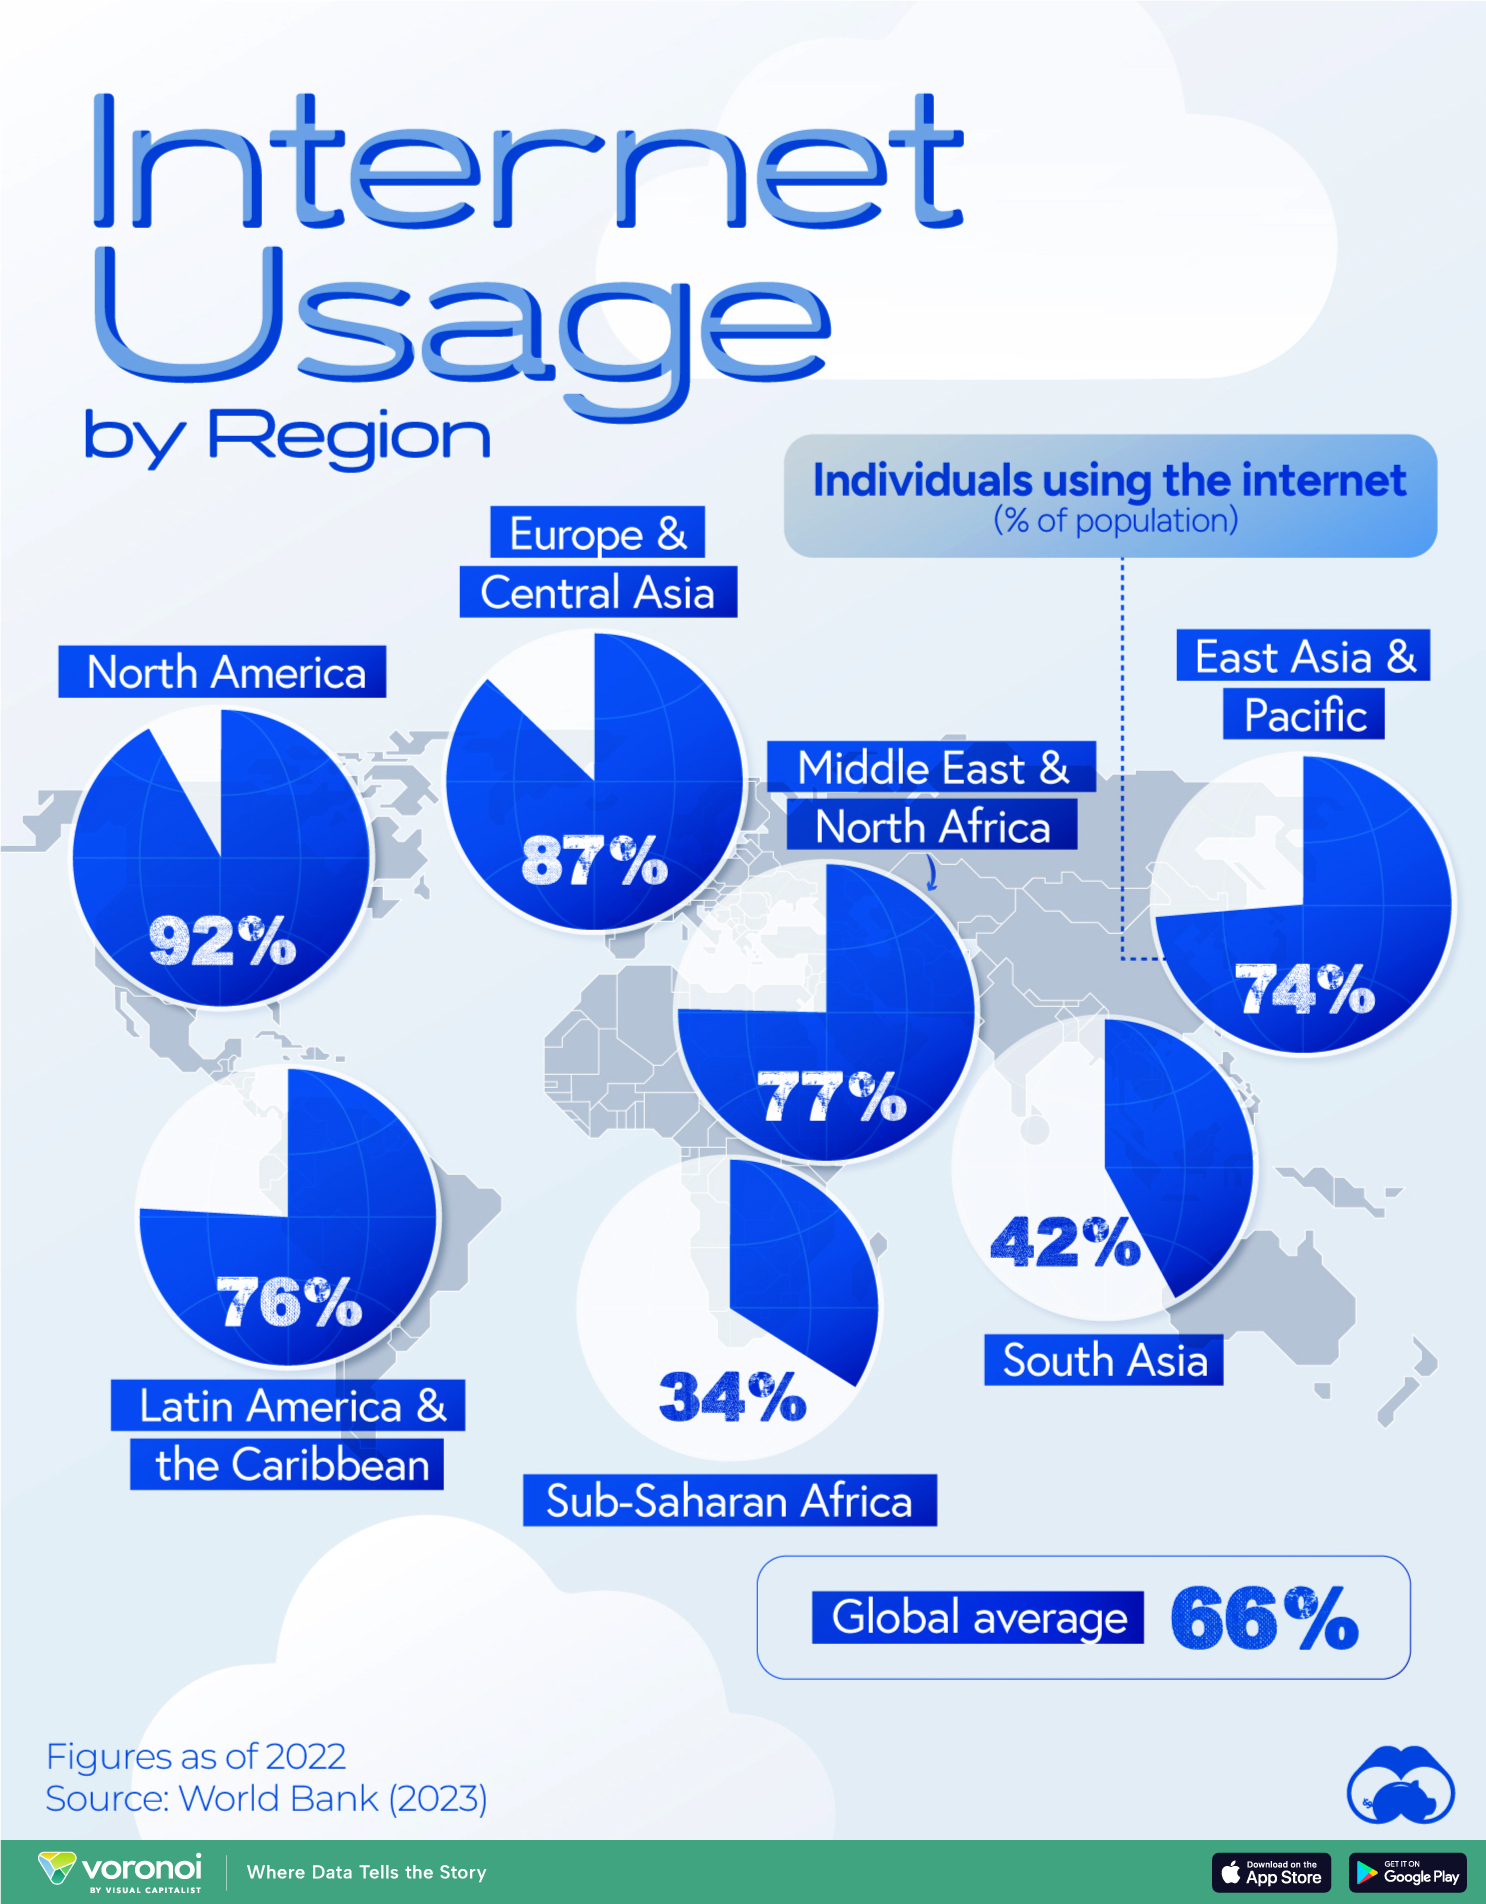 Map showing internet usage by region.